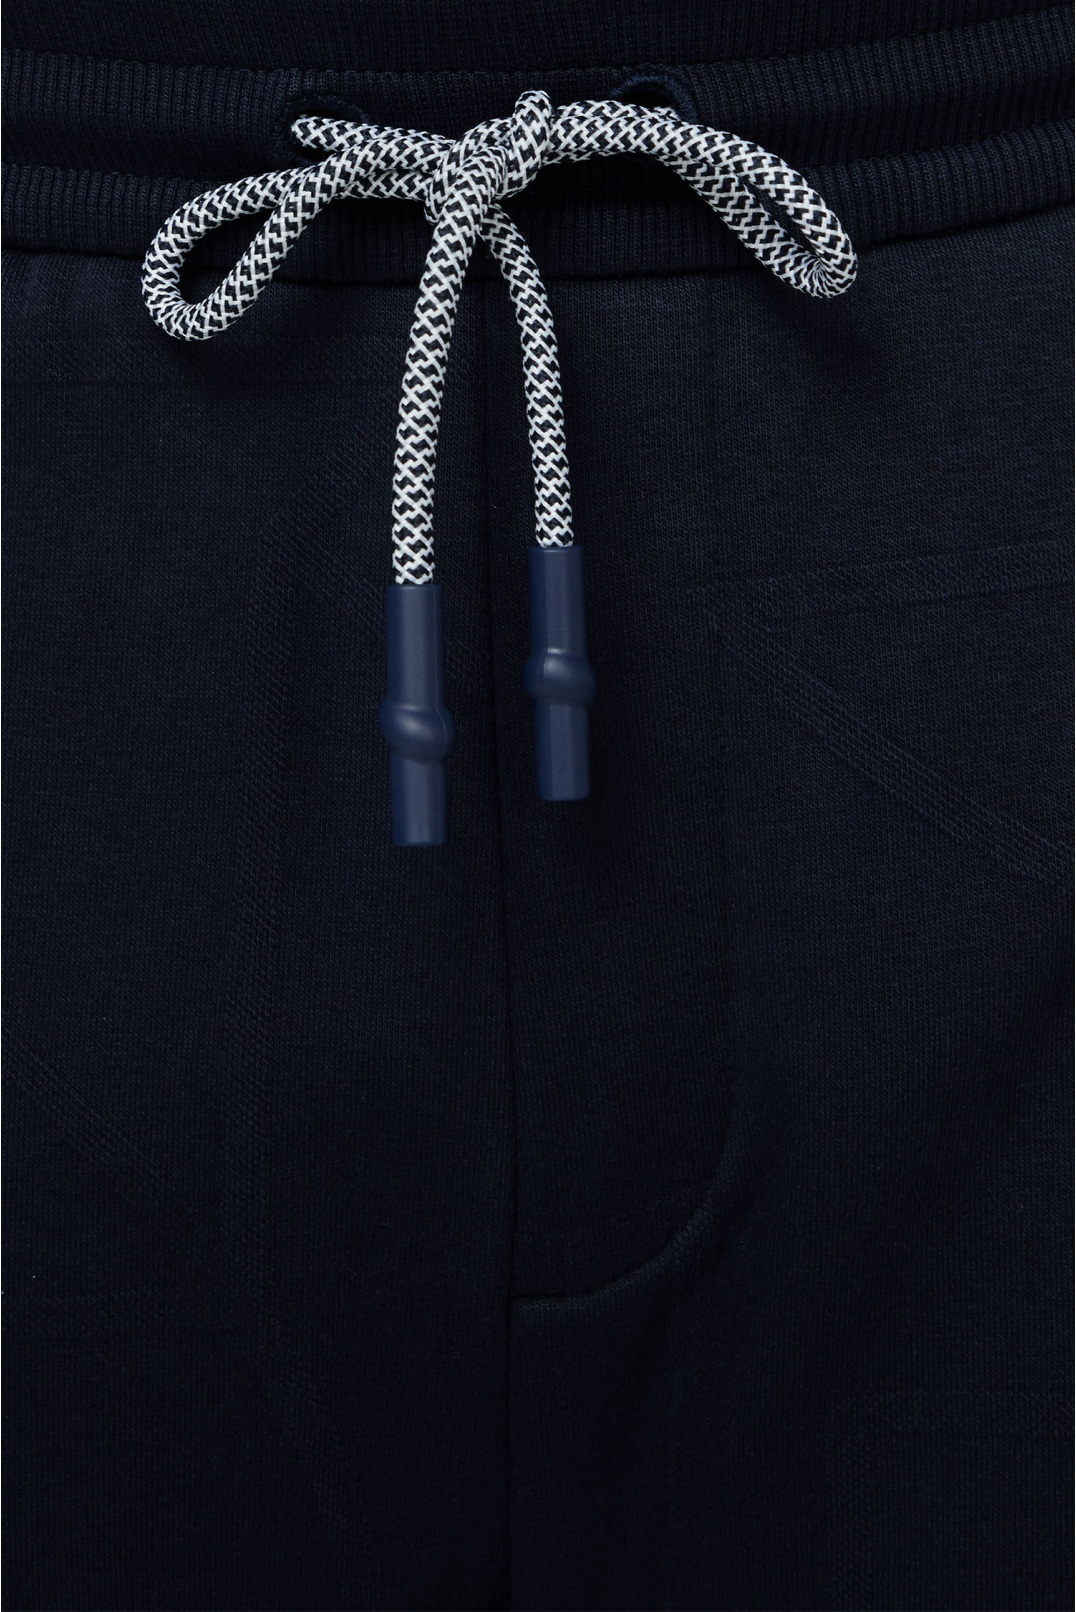 Мужской темно-синий спортивный костюм с узором (кофта, брюки) - 4